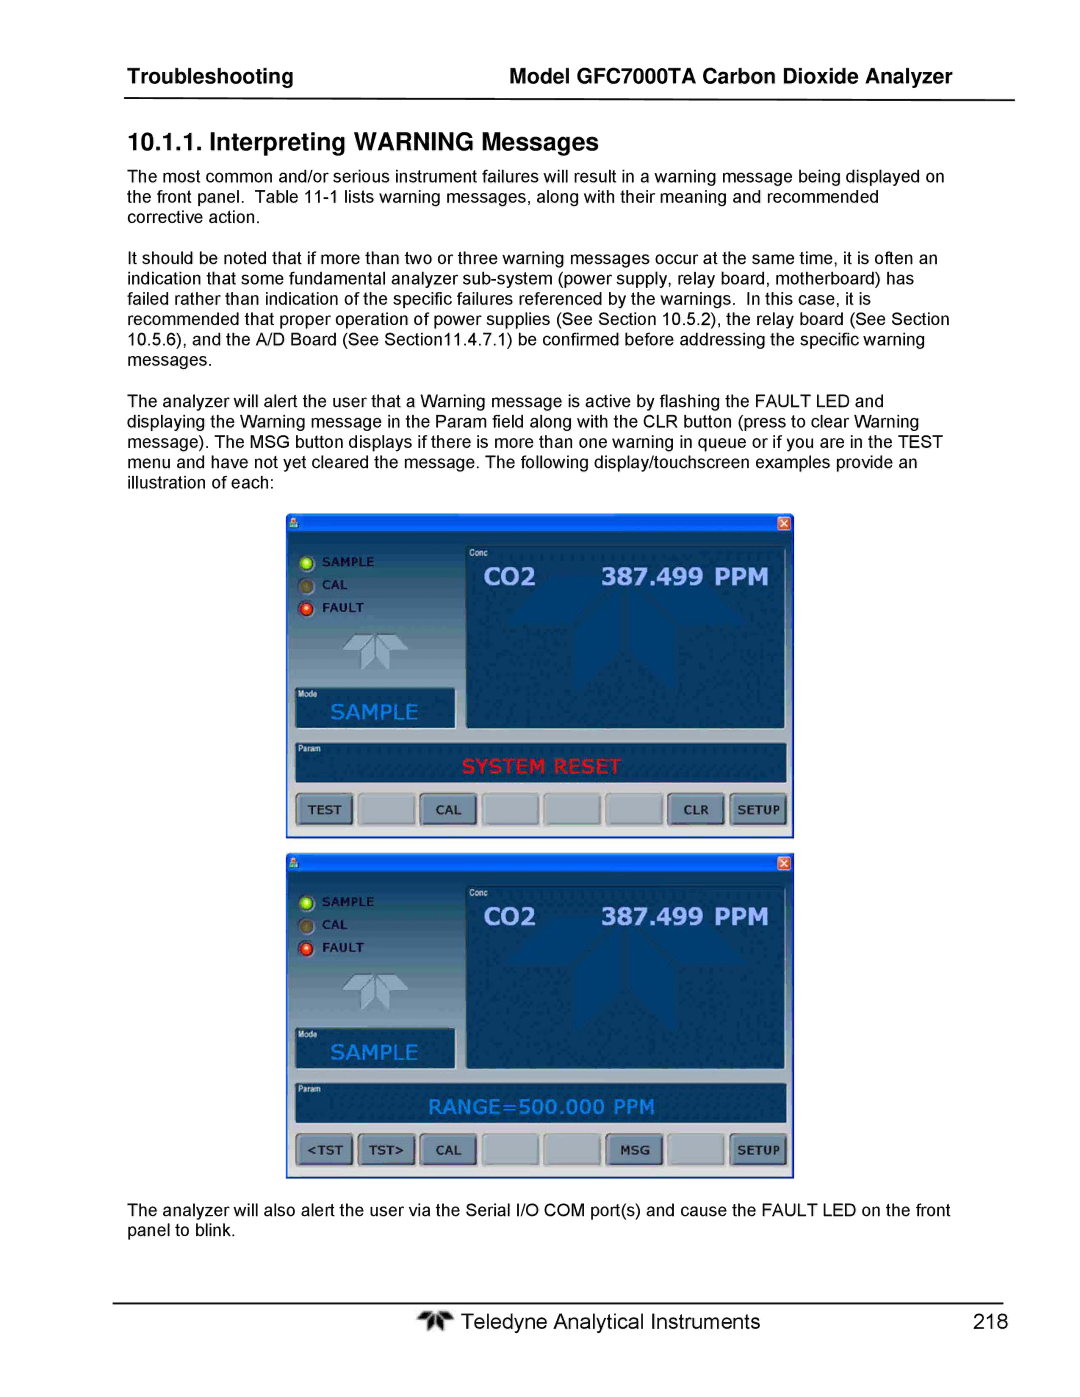 Teledyne gfc 7000ta operation manual Interpreting Warning Messages 